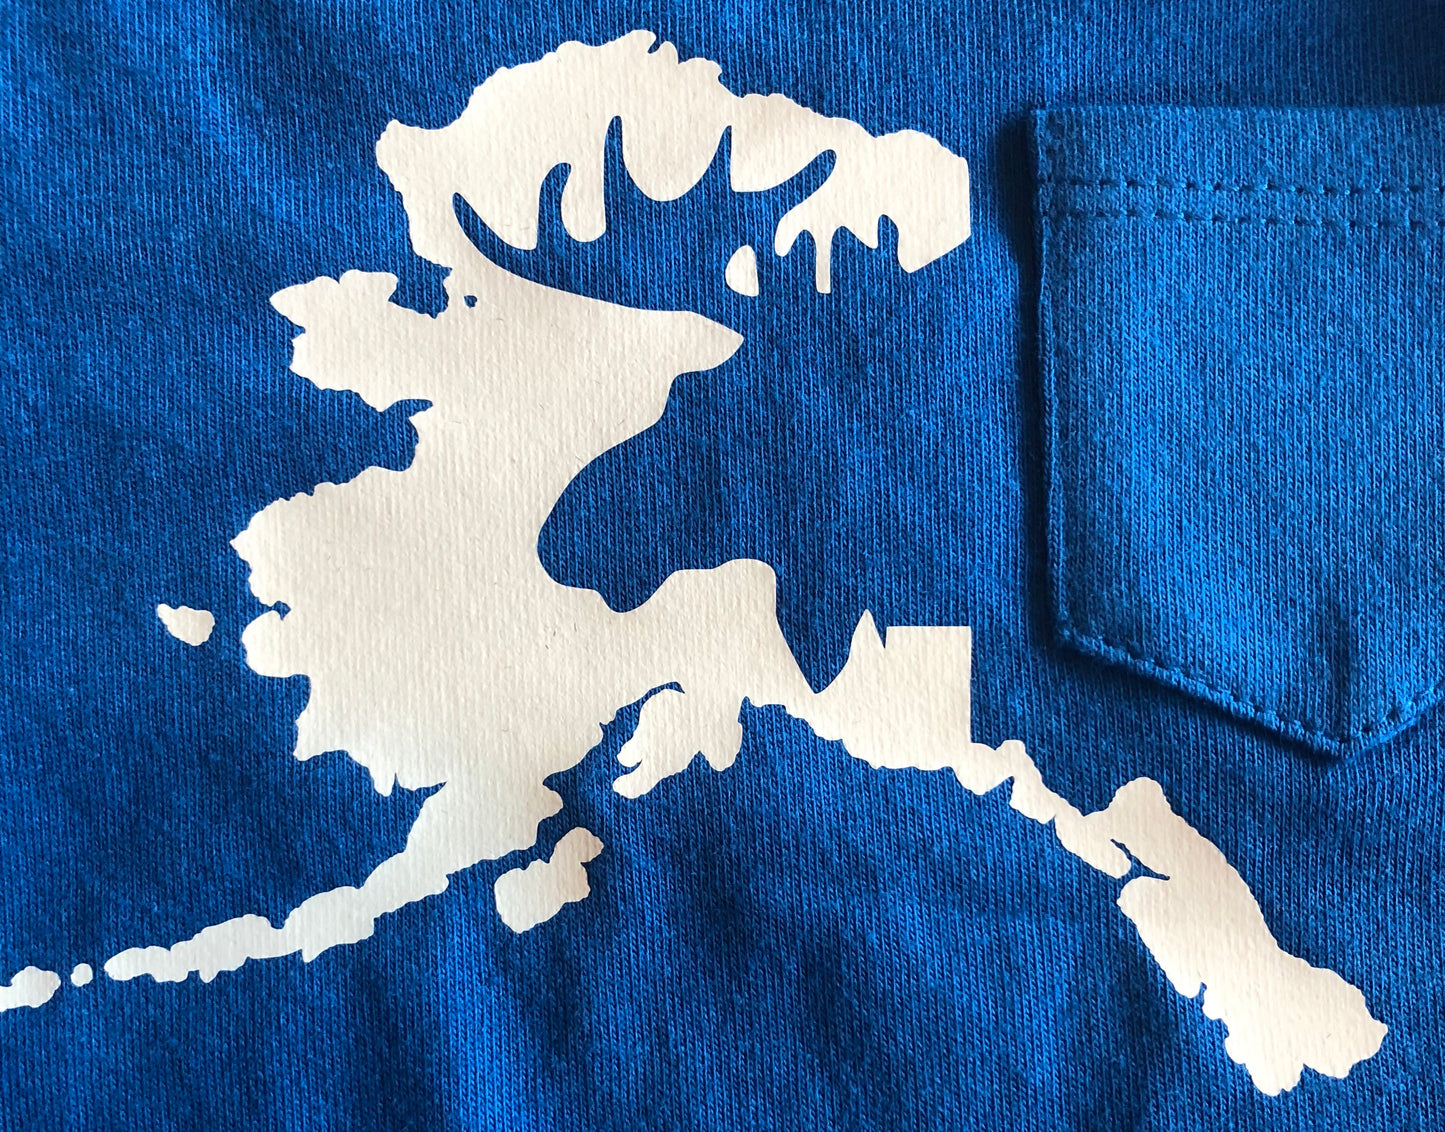 Alaska Moose Blue T-Shirt Size 6-9m